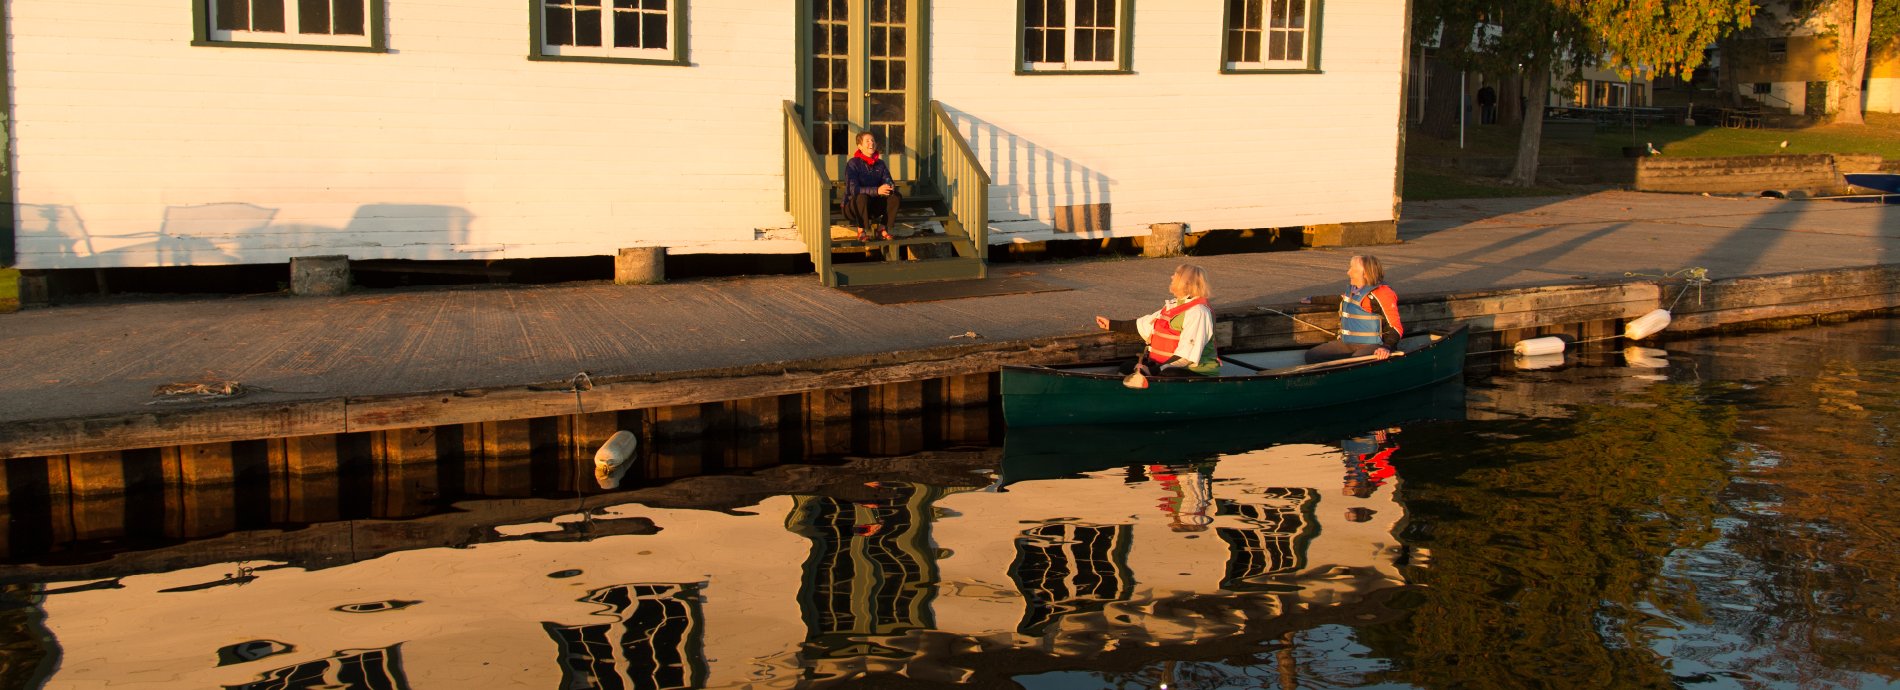 paddlers resting alongside a wooden dock